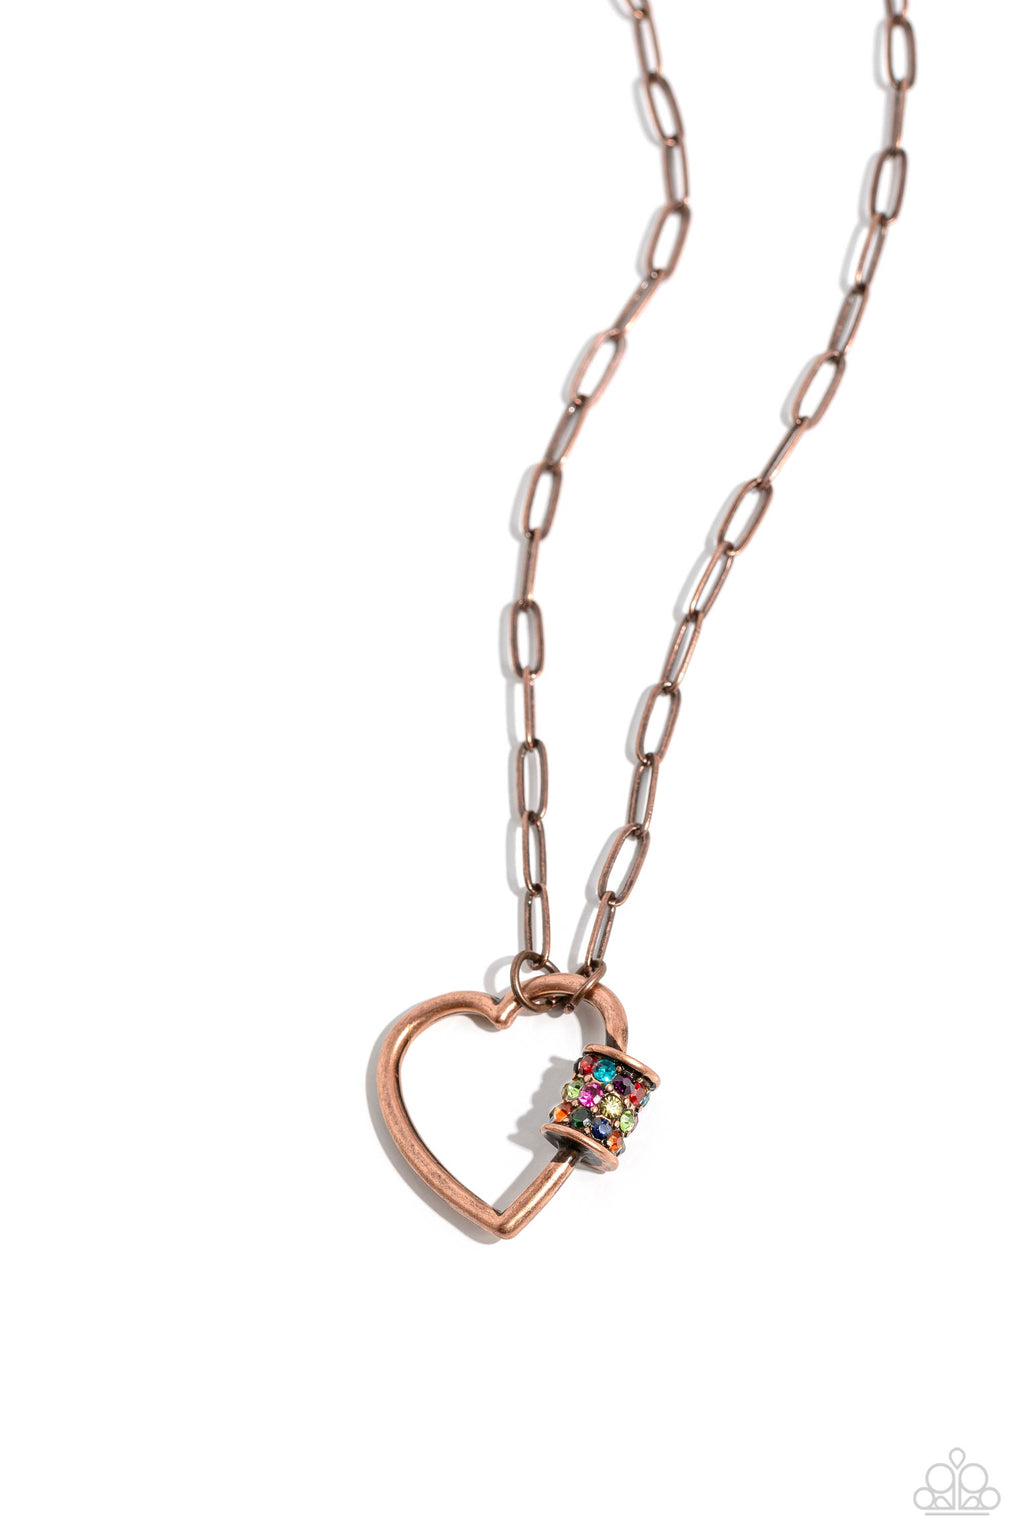 five-dollar-jewelry-affectionate-attitude-copper-necklace-paparazzi-accessories